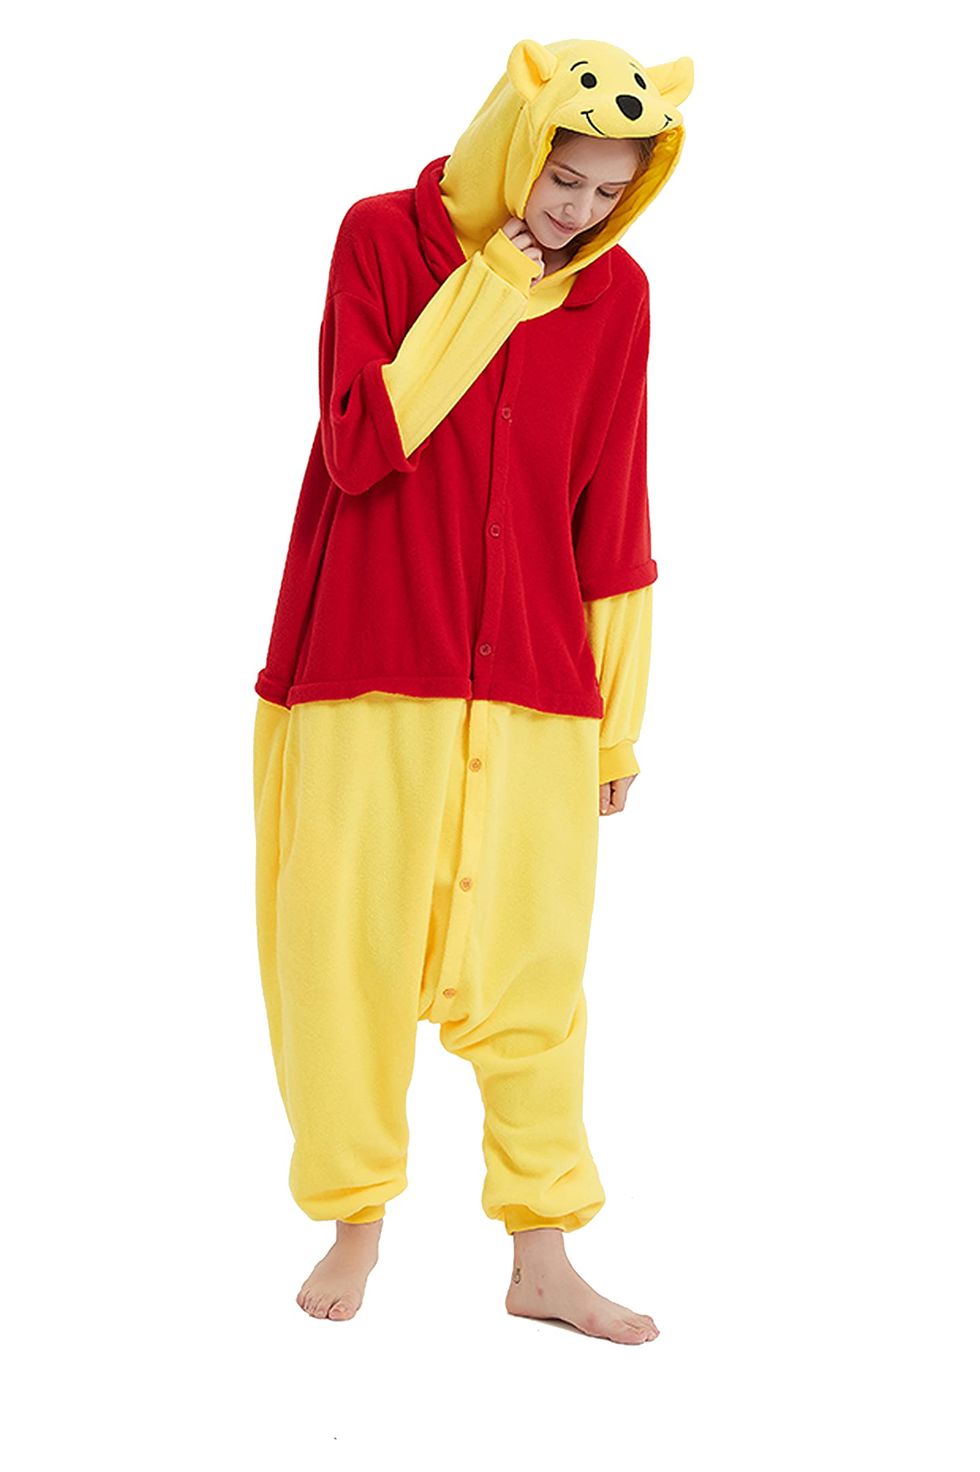 'Winnie the Pooh' Halloween Costumes